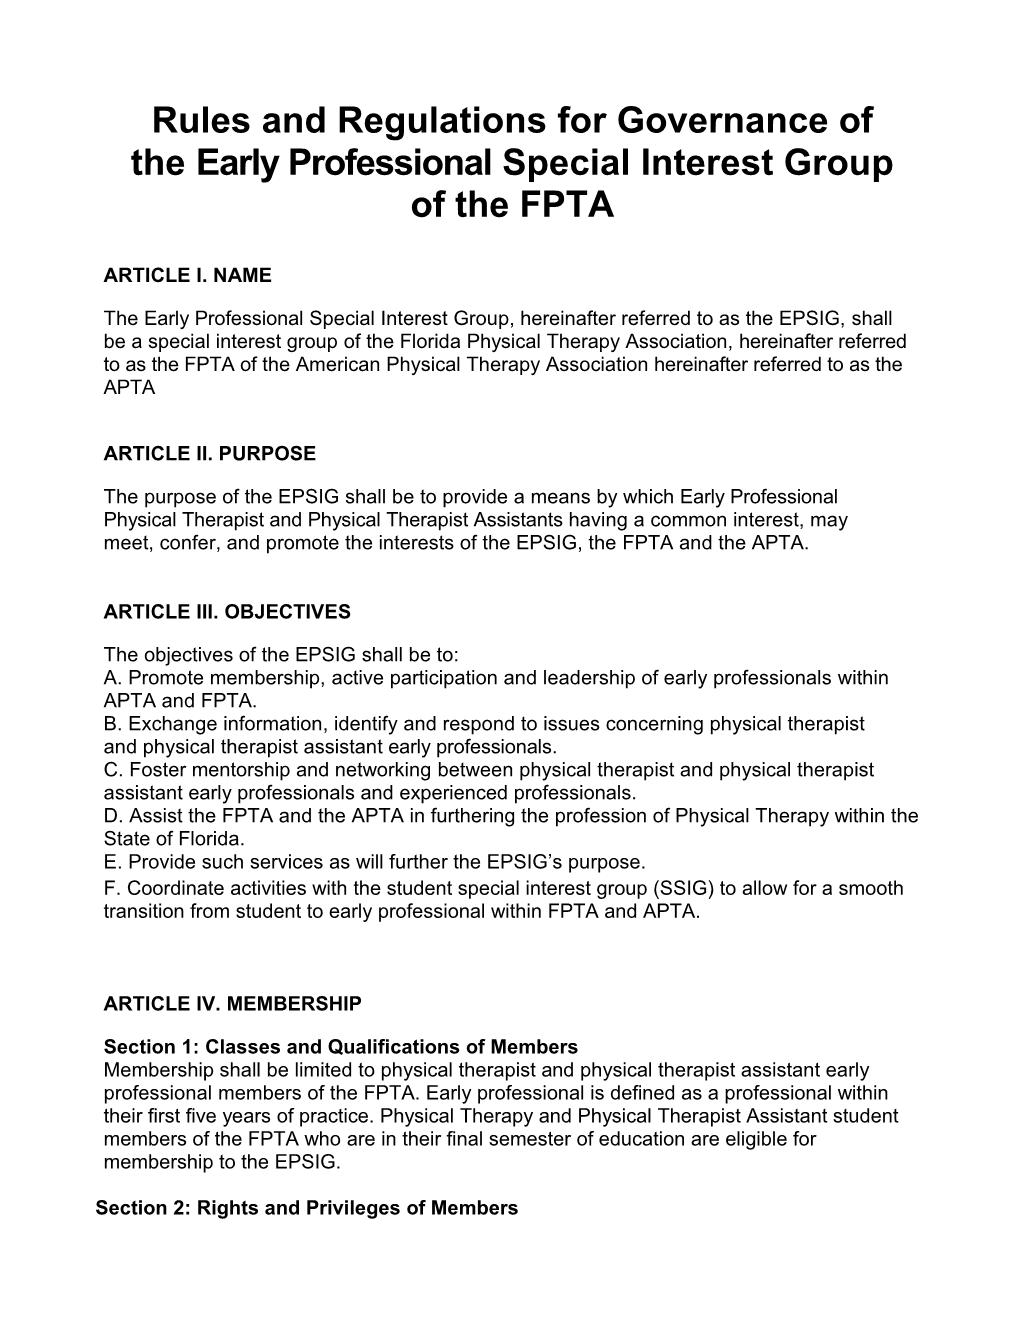 Rulesandregulationsforgovernanceof Theearly Professional Specialinterestgroupofthe FPTA